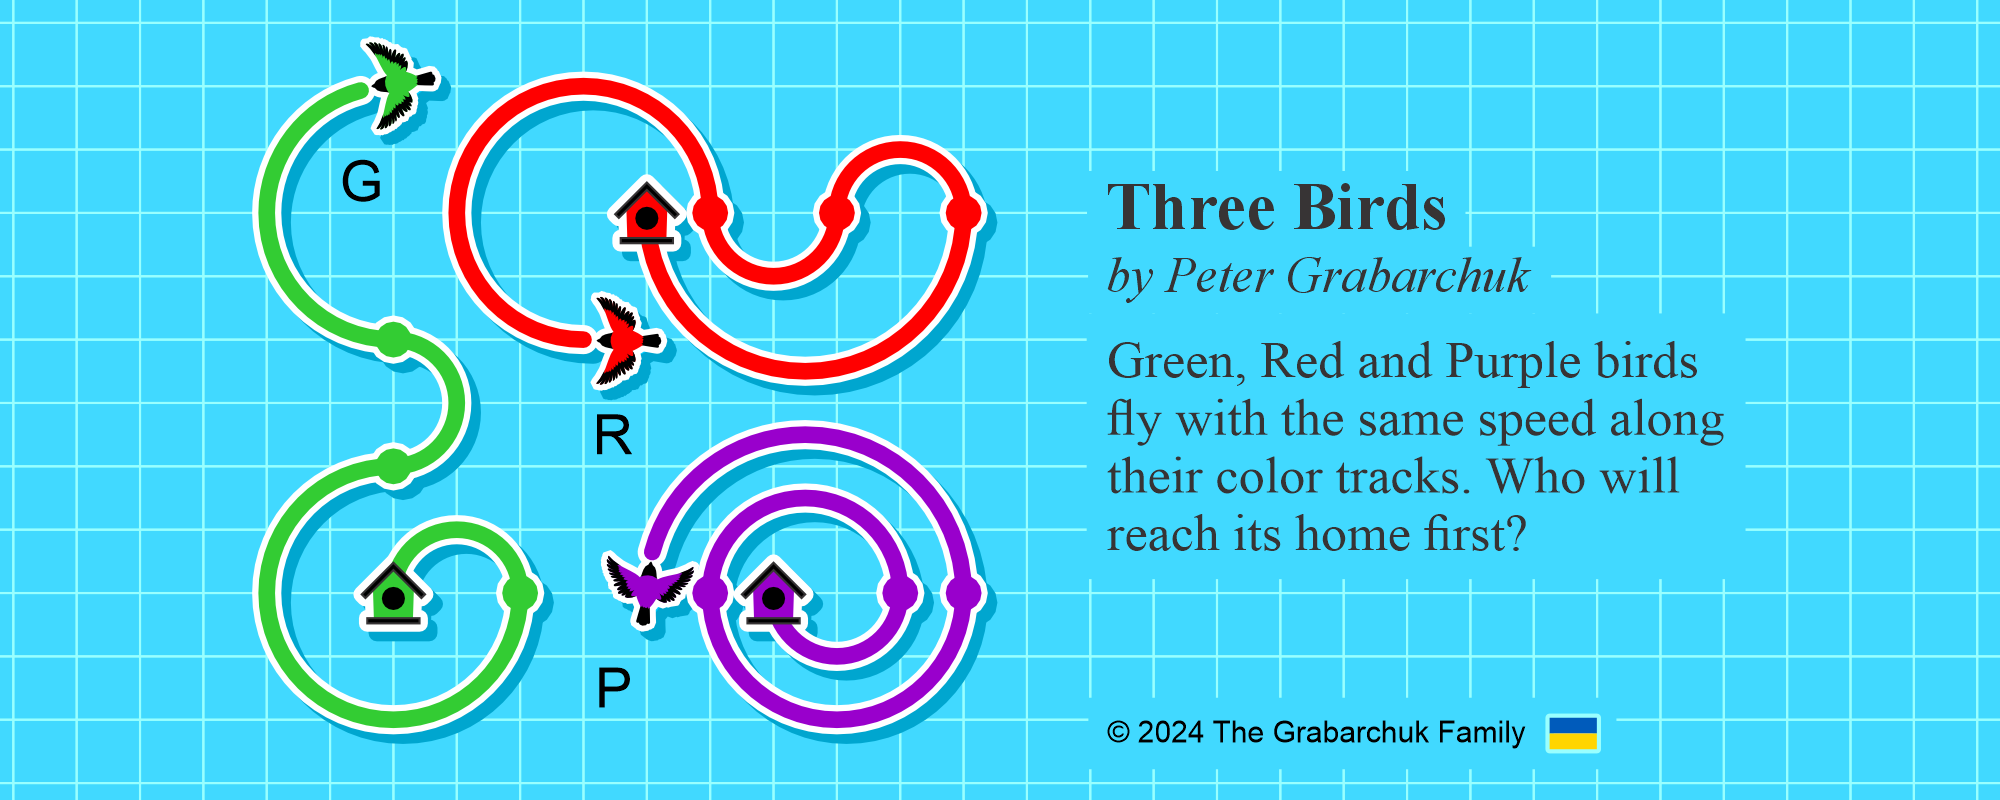 Three Birds by Peter Grabarchuk